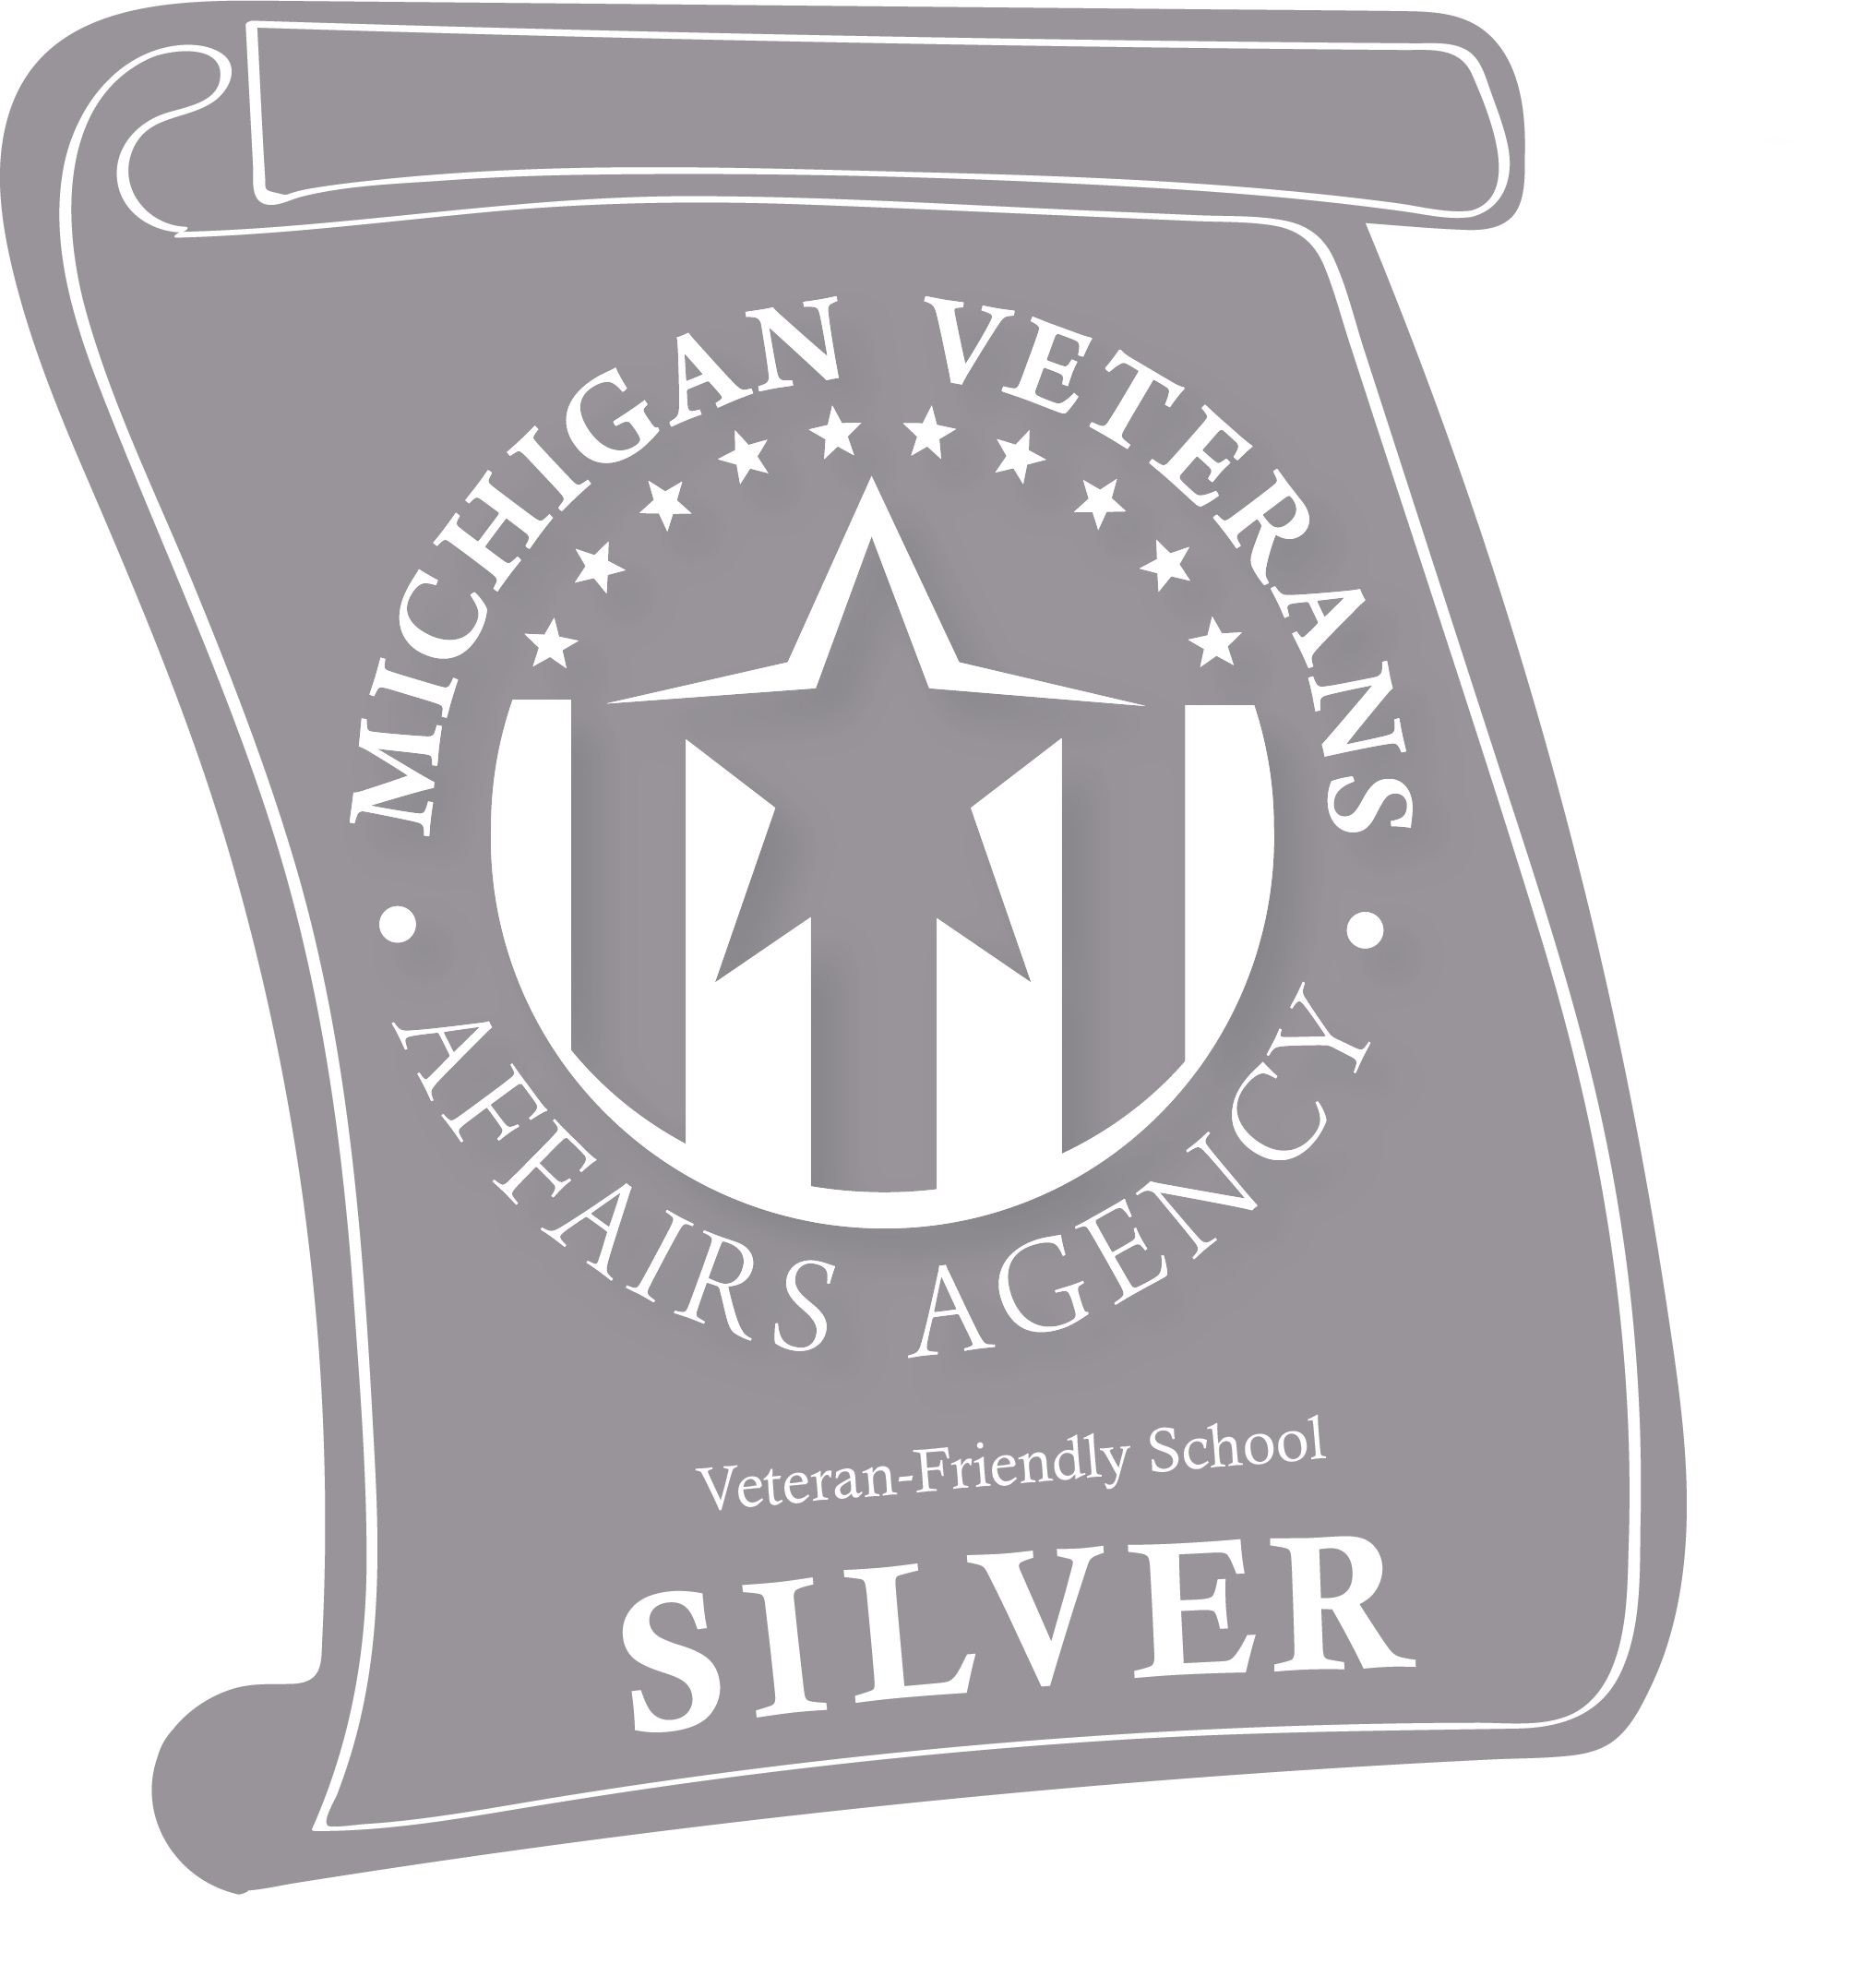 Michigan Veterans Affairs Agency Silver Scroll 